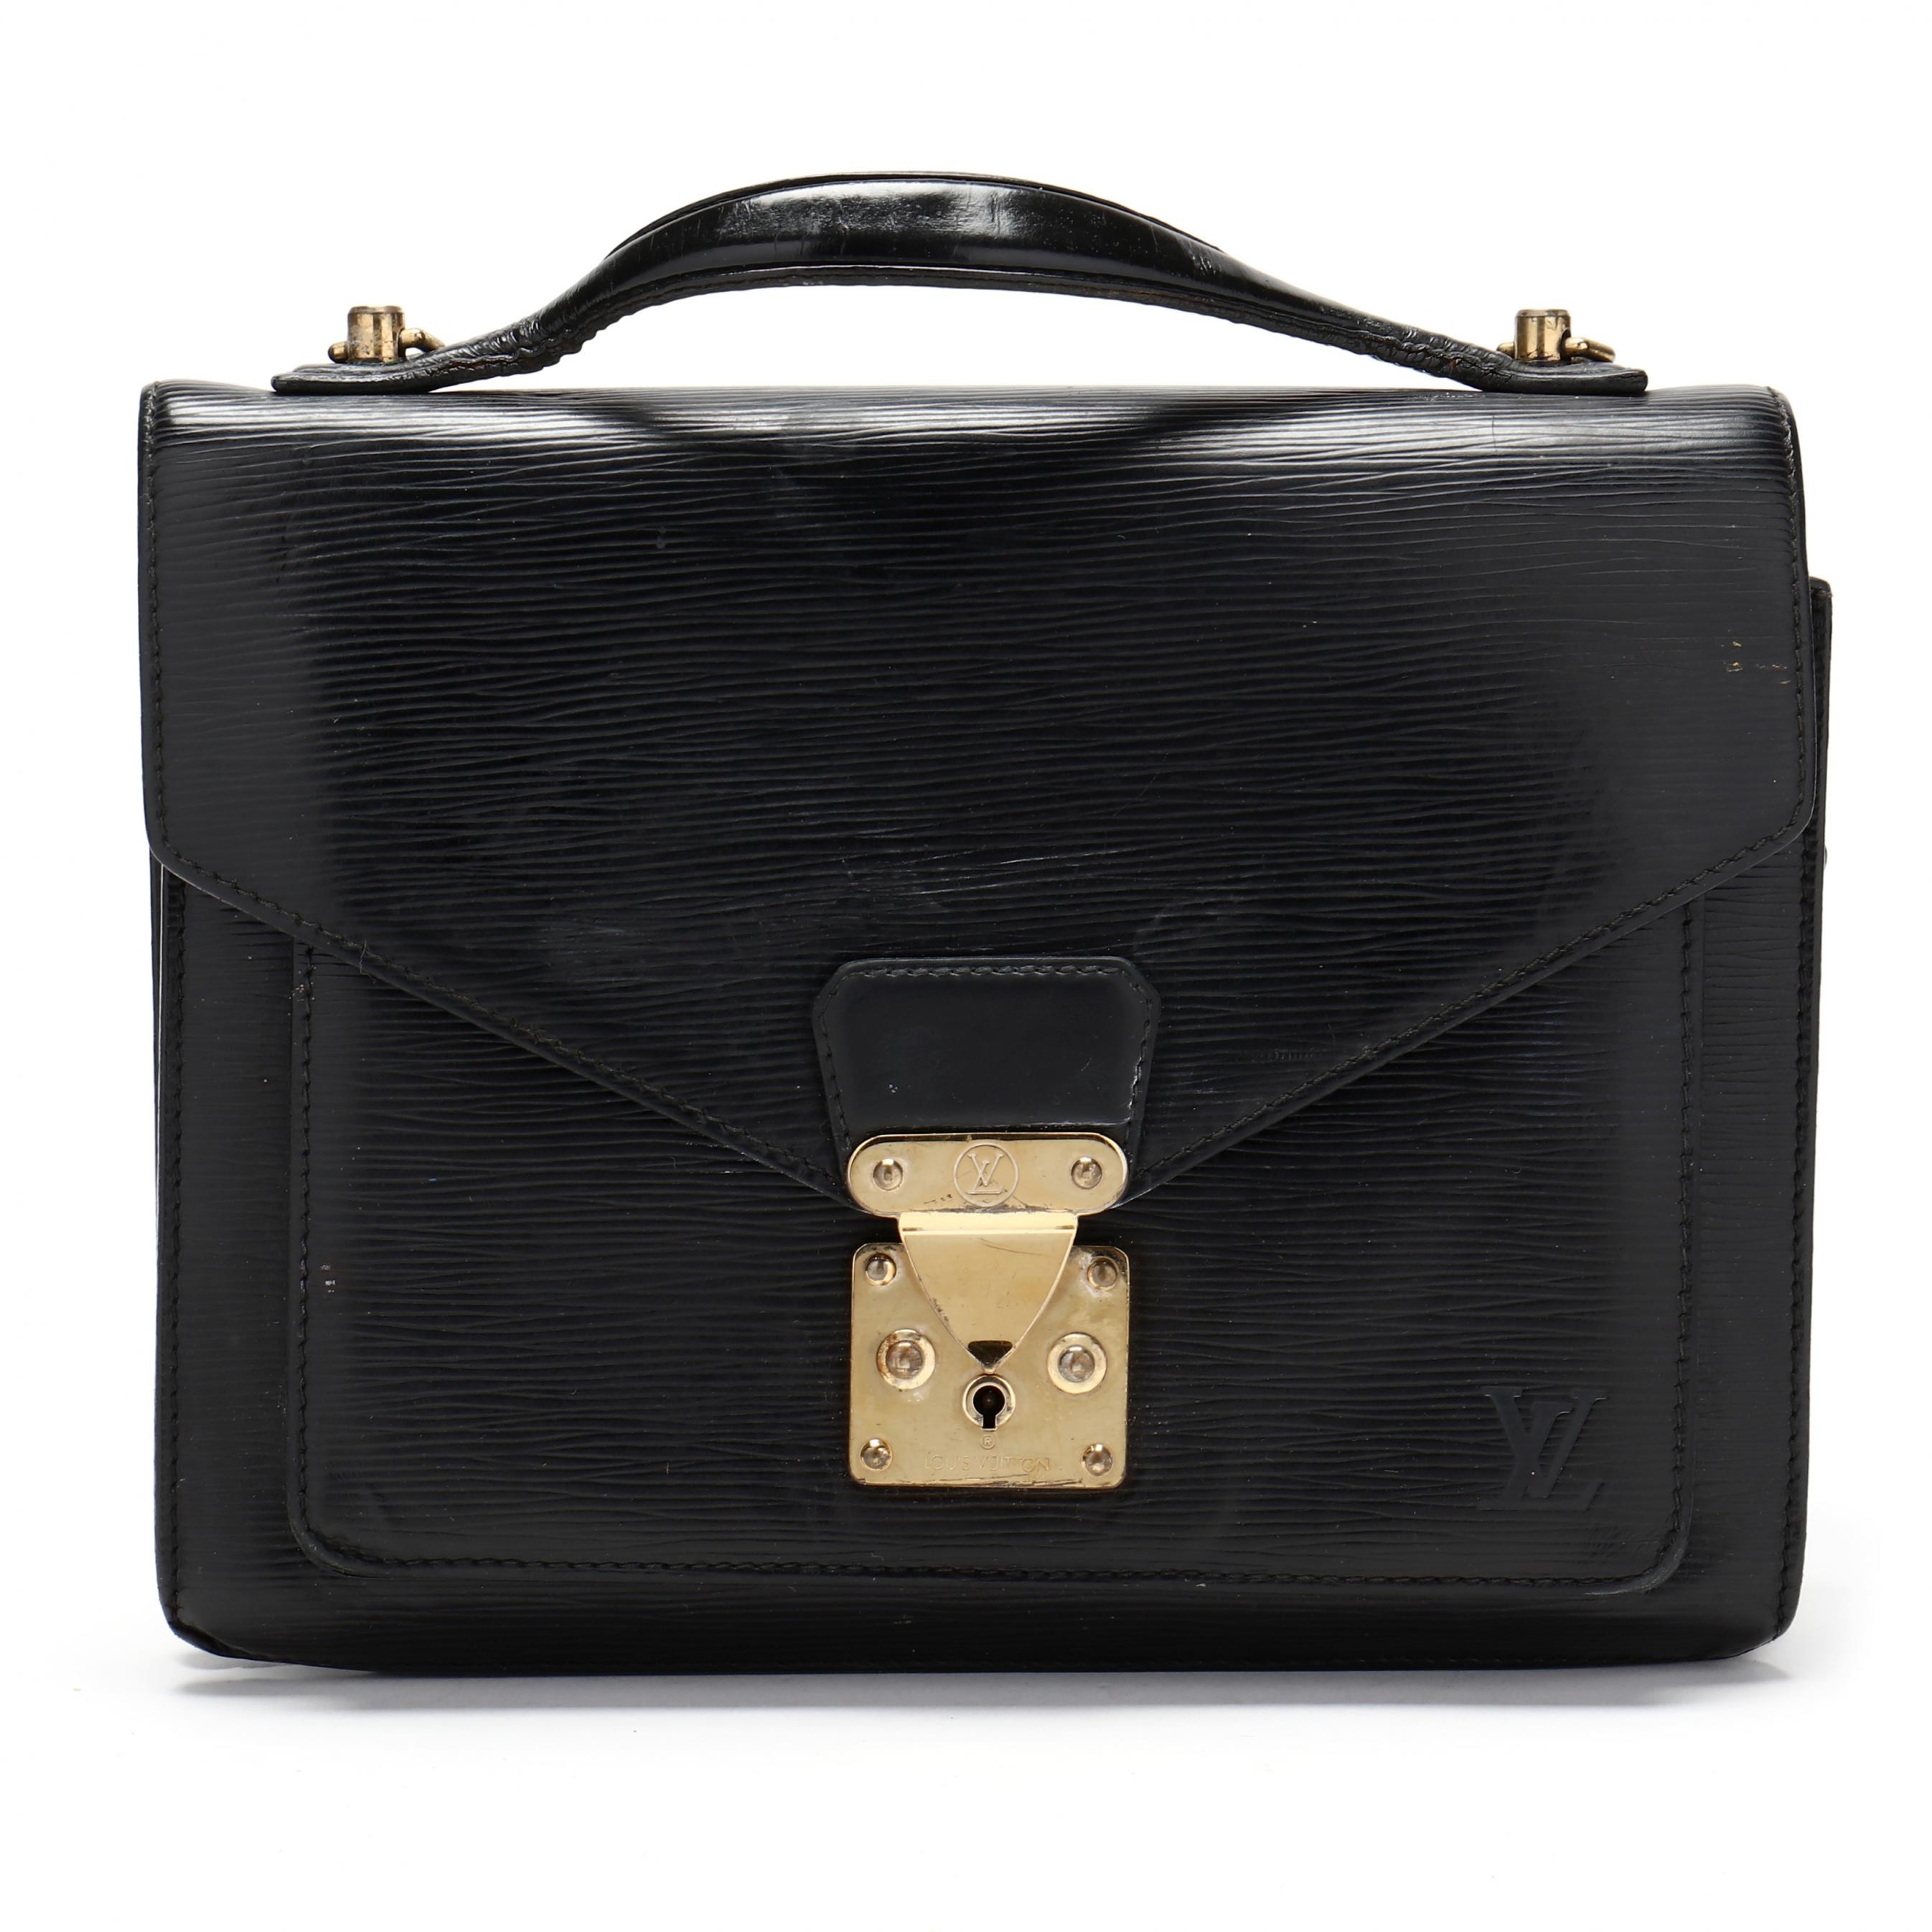 Sold at Auction: Fendi Brown Epi Leather Crossbody Bag